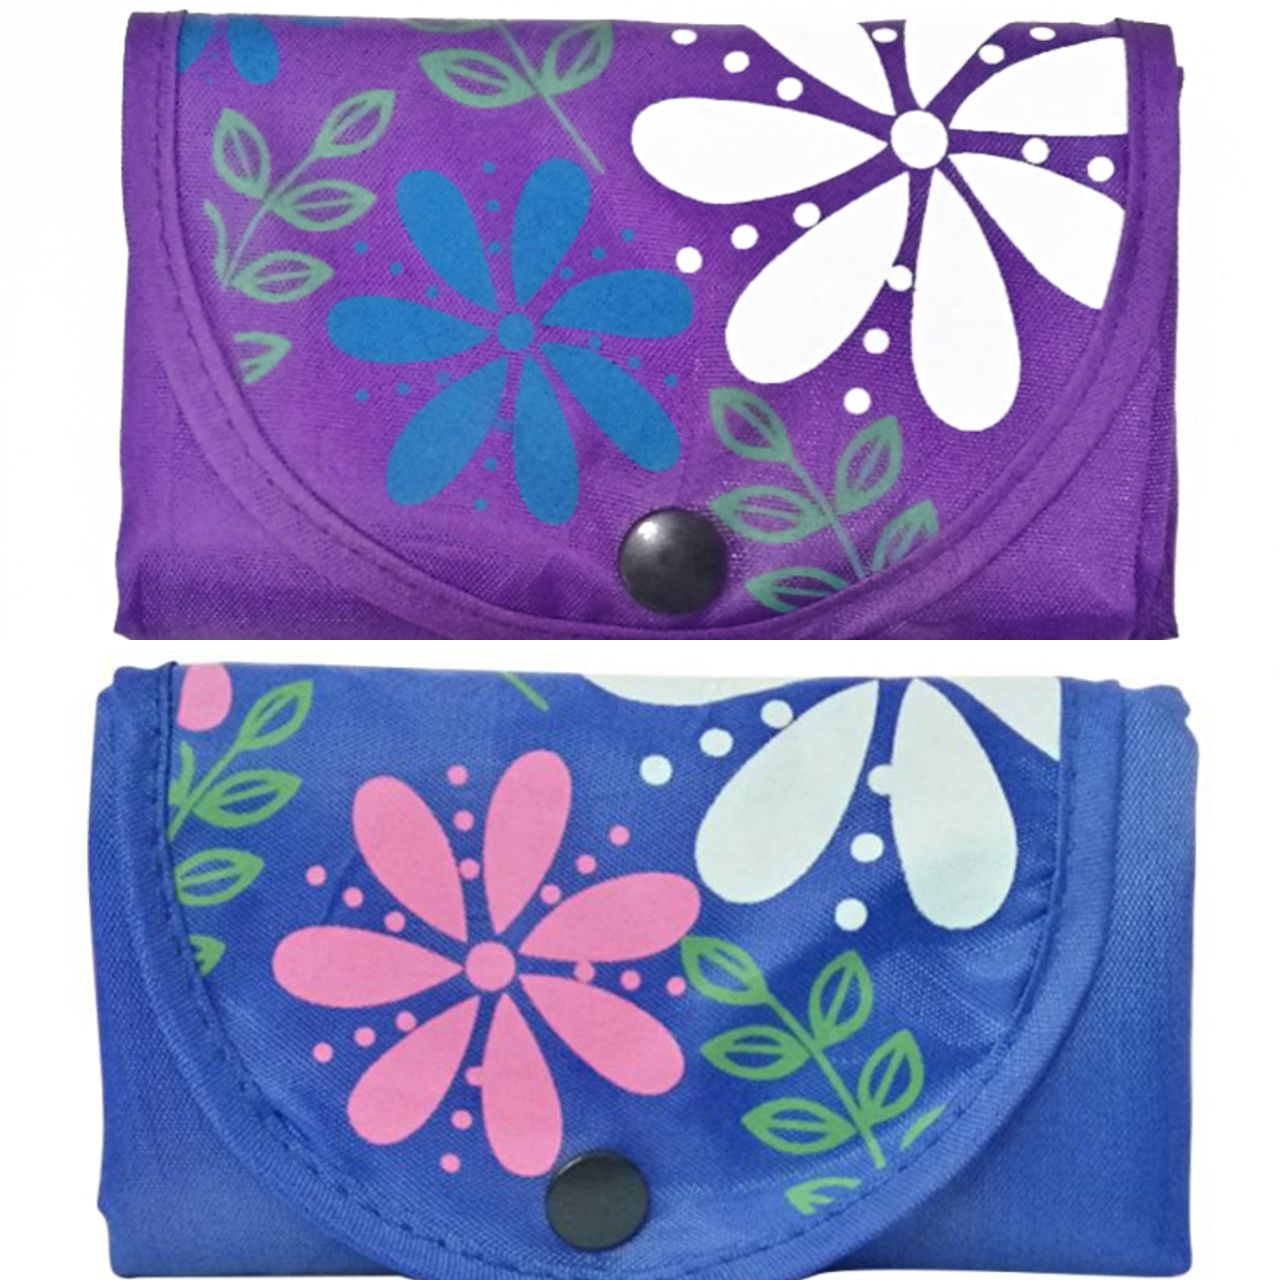 Women Foldable Handbag Large Capacity Portable Casual Floral Environmental Shopping Bag Colorful All-match Buckle Shopping Bag